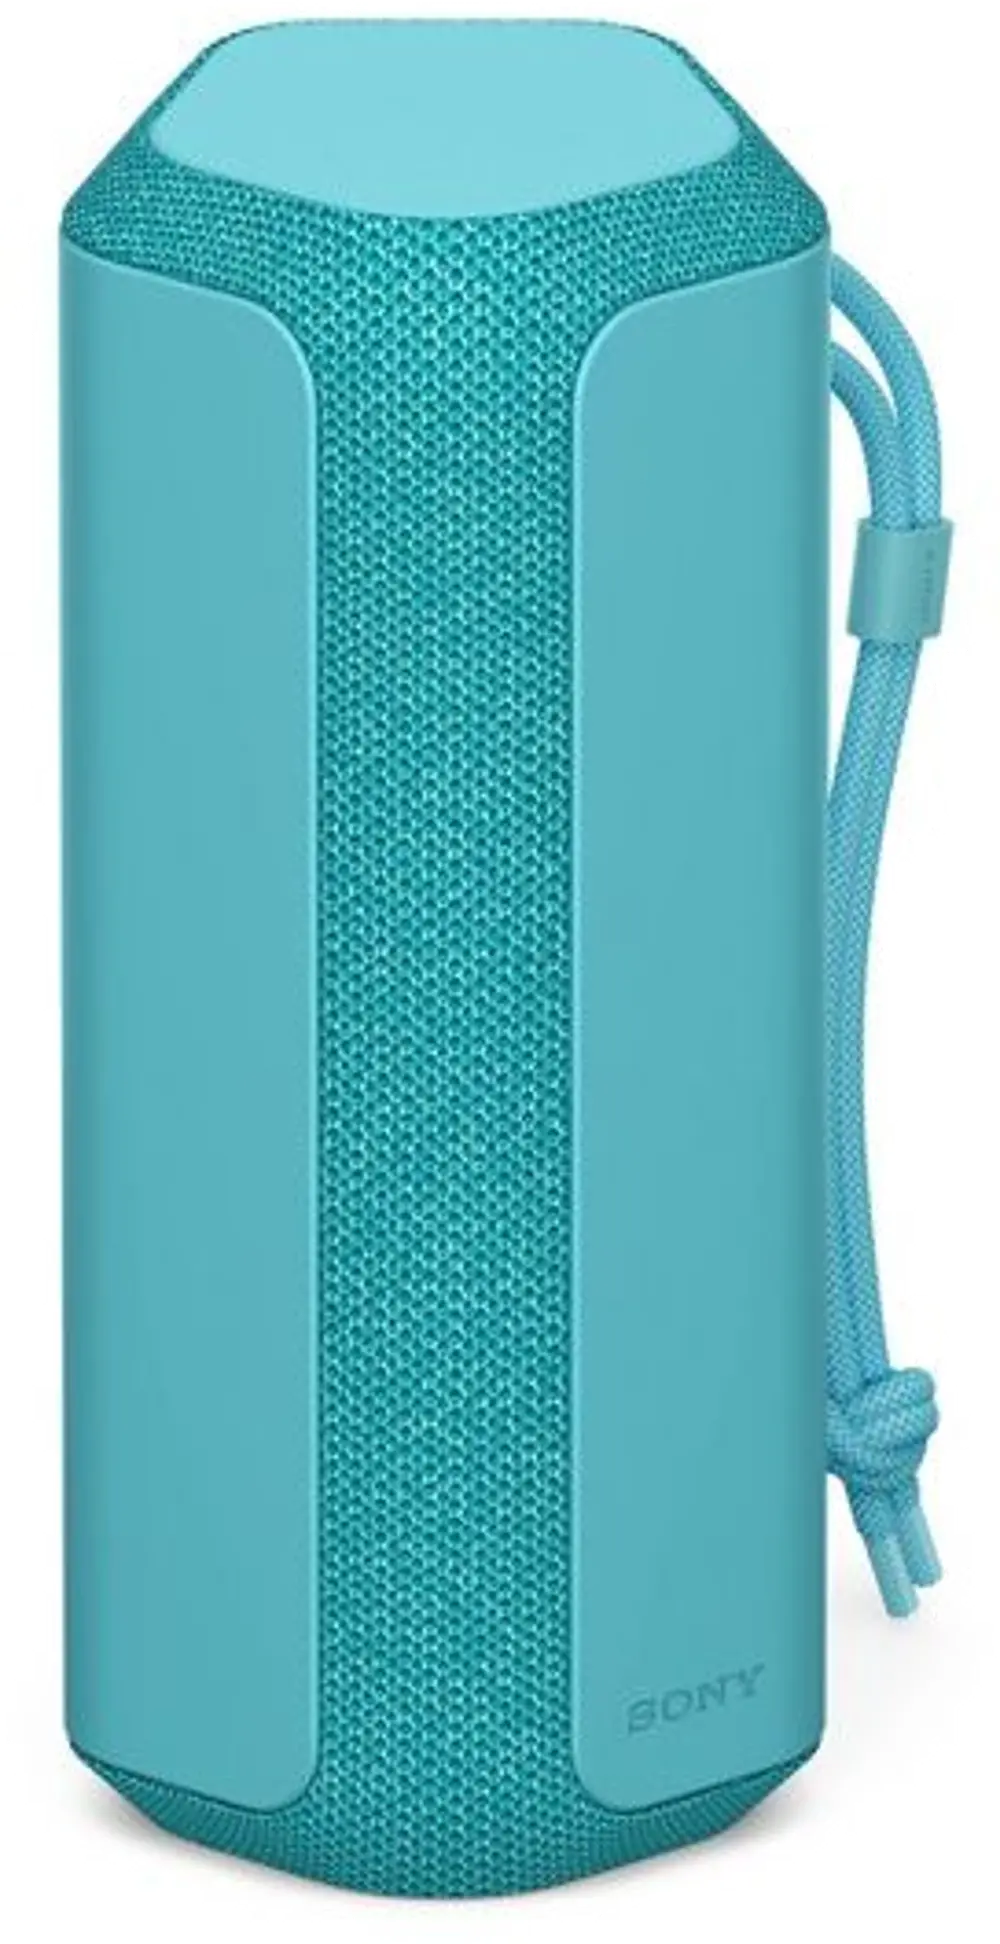 SRSXE200/L BLUE Sony - SRSXE200 Portable X-Series Bluetooth Speaker - Blue-1